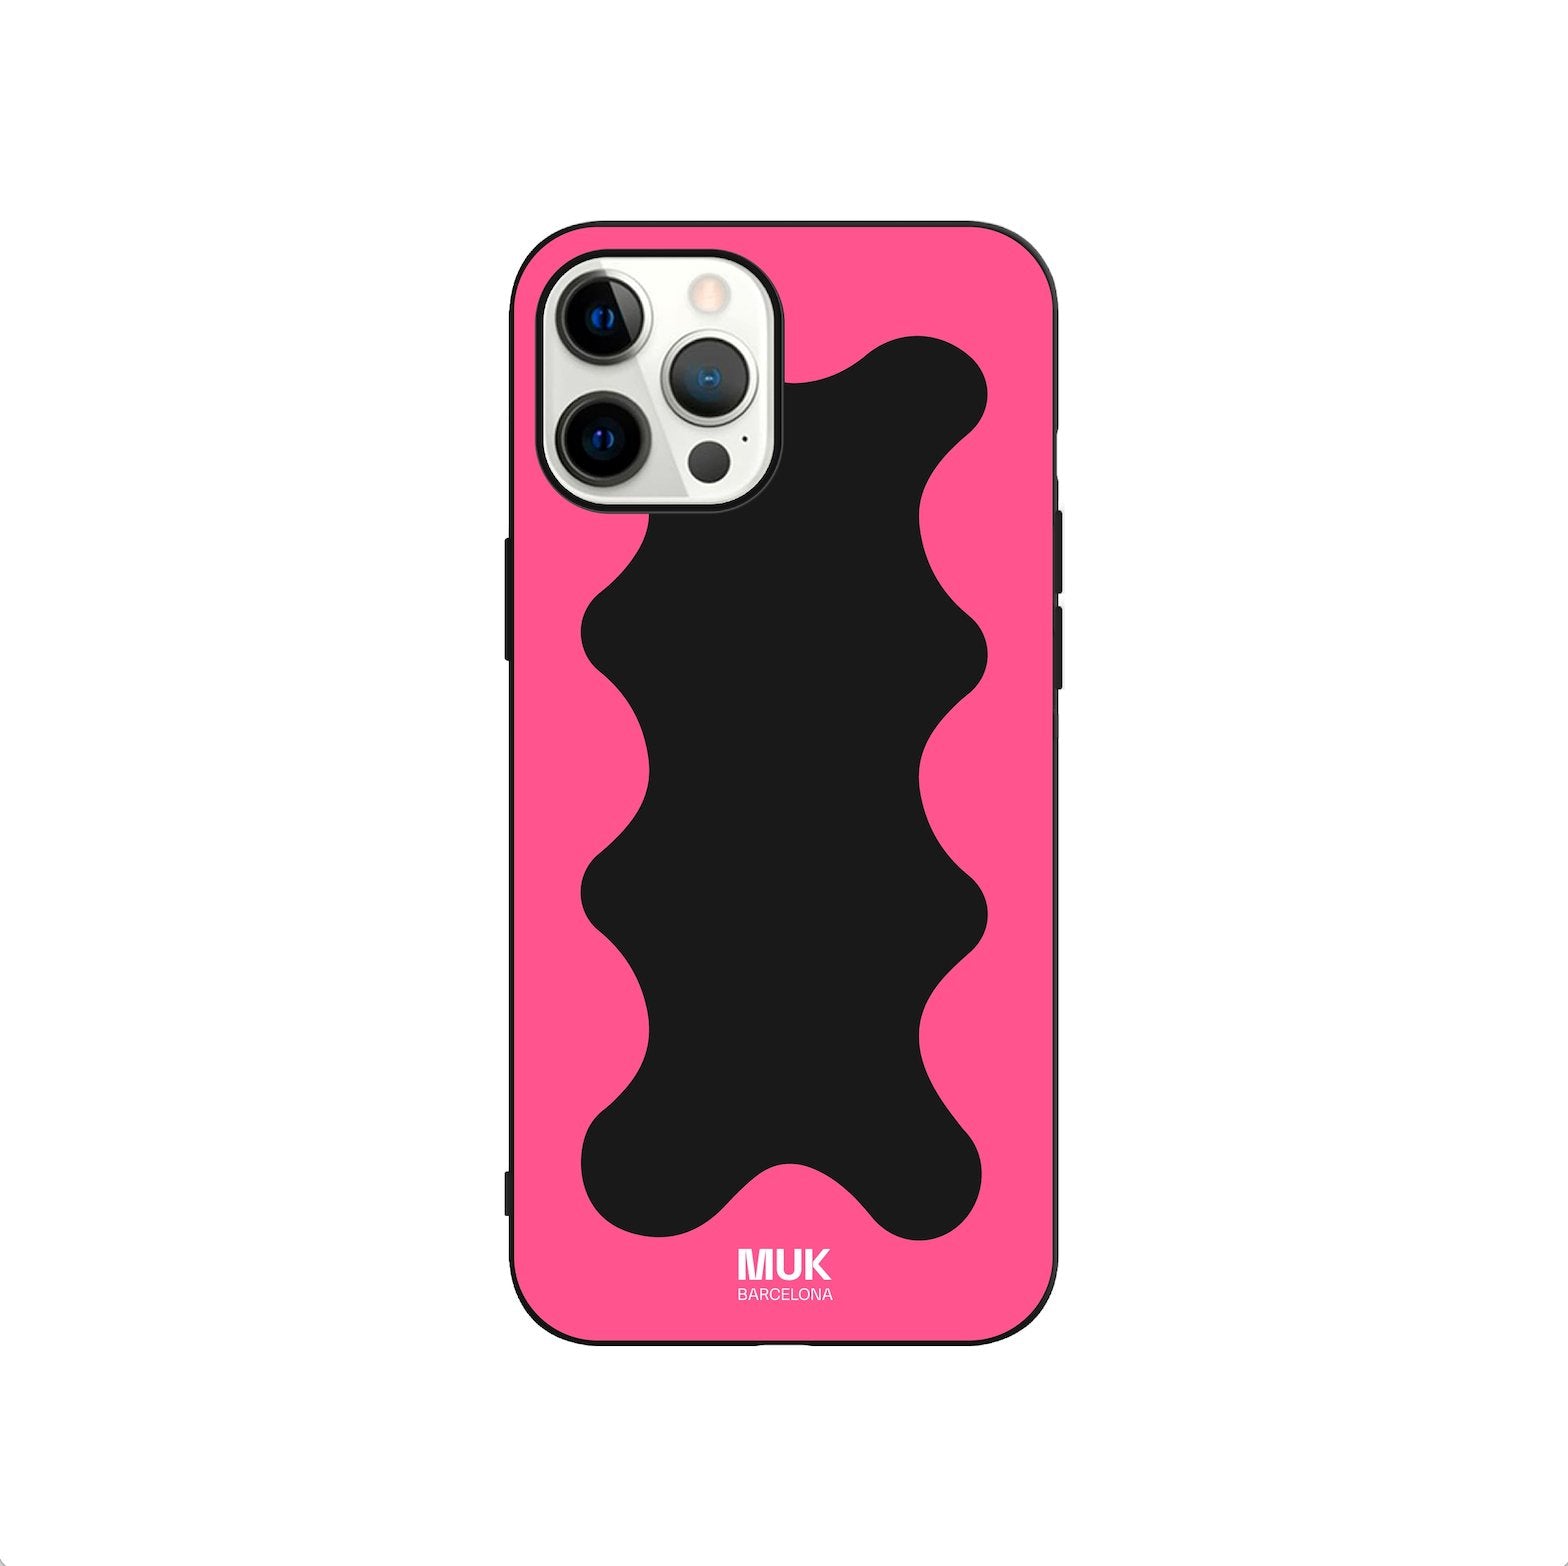 Black TPU  case with pink wavy frame design.
